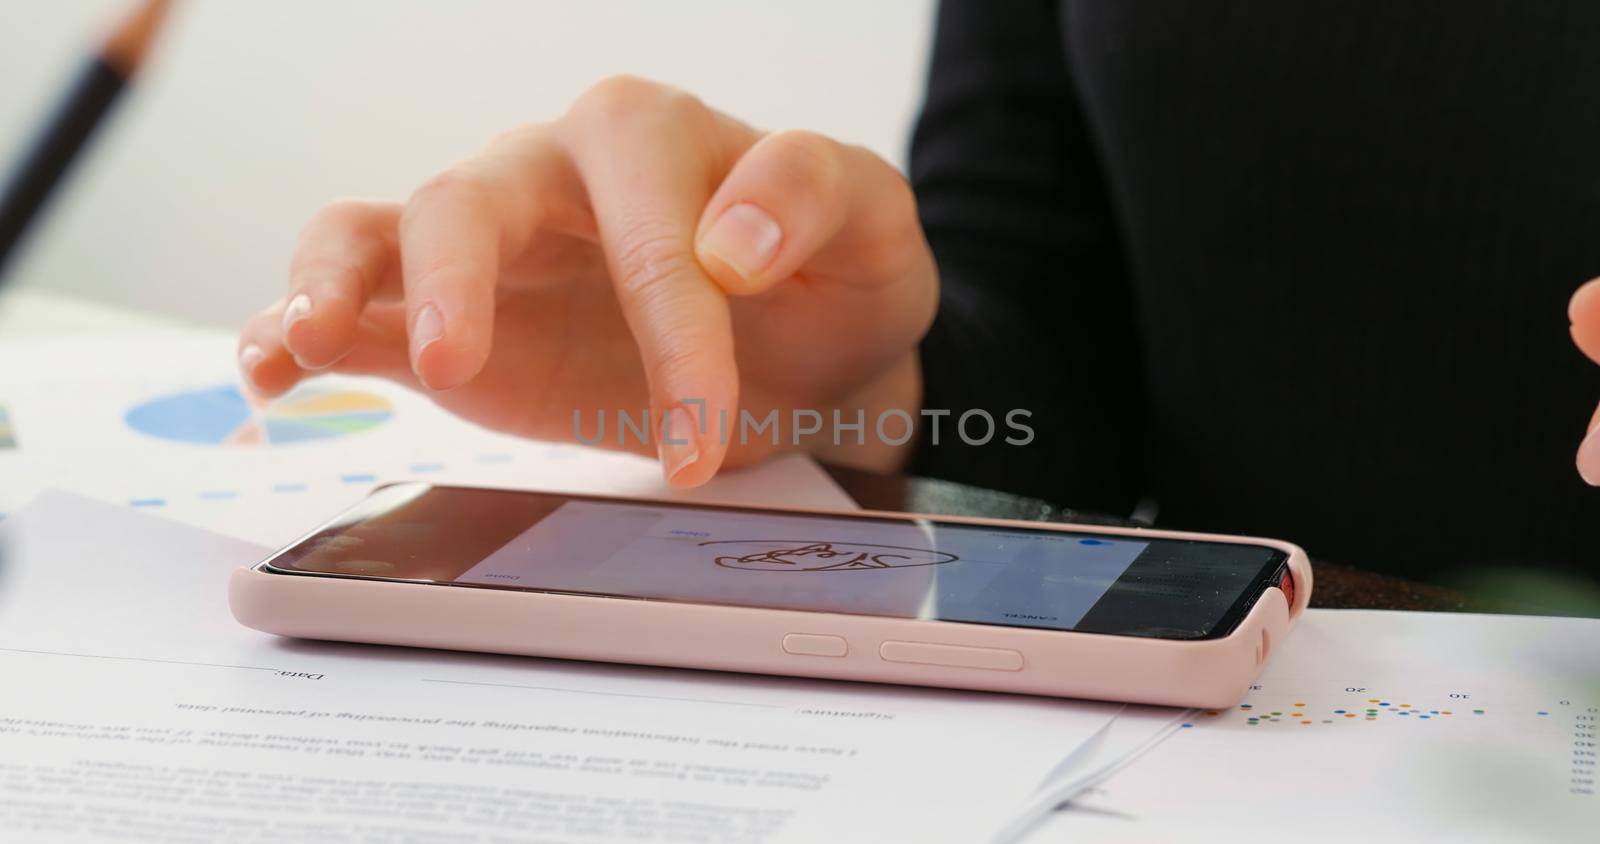 Digital Signature on smartphone screen. by RecCameraStock